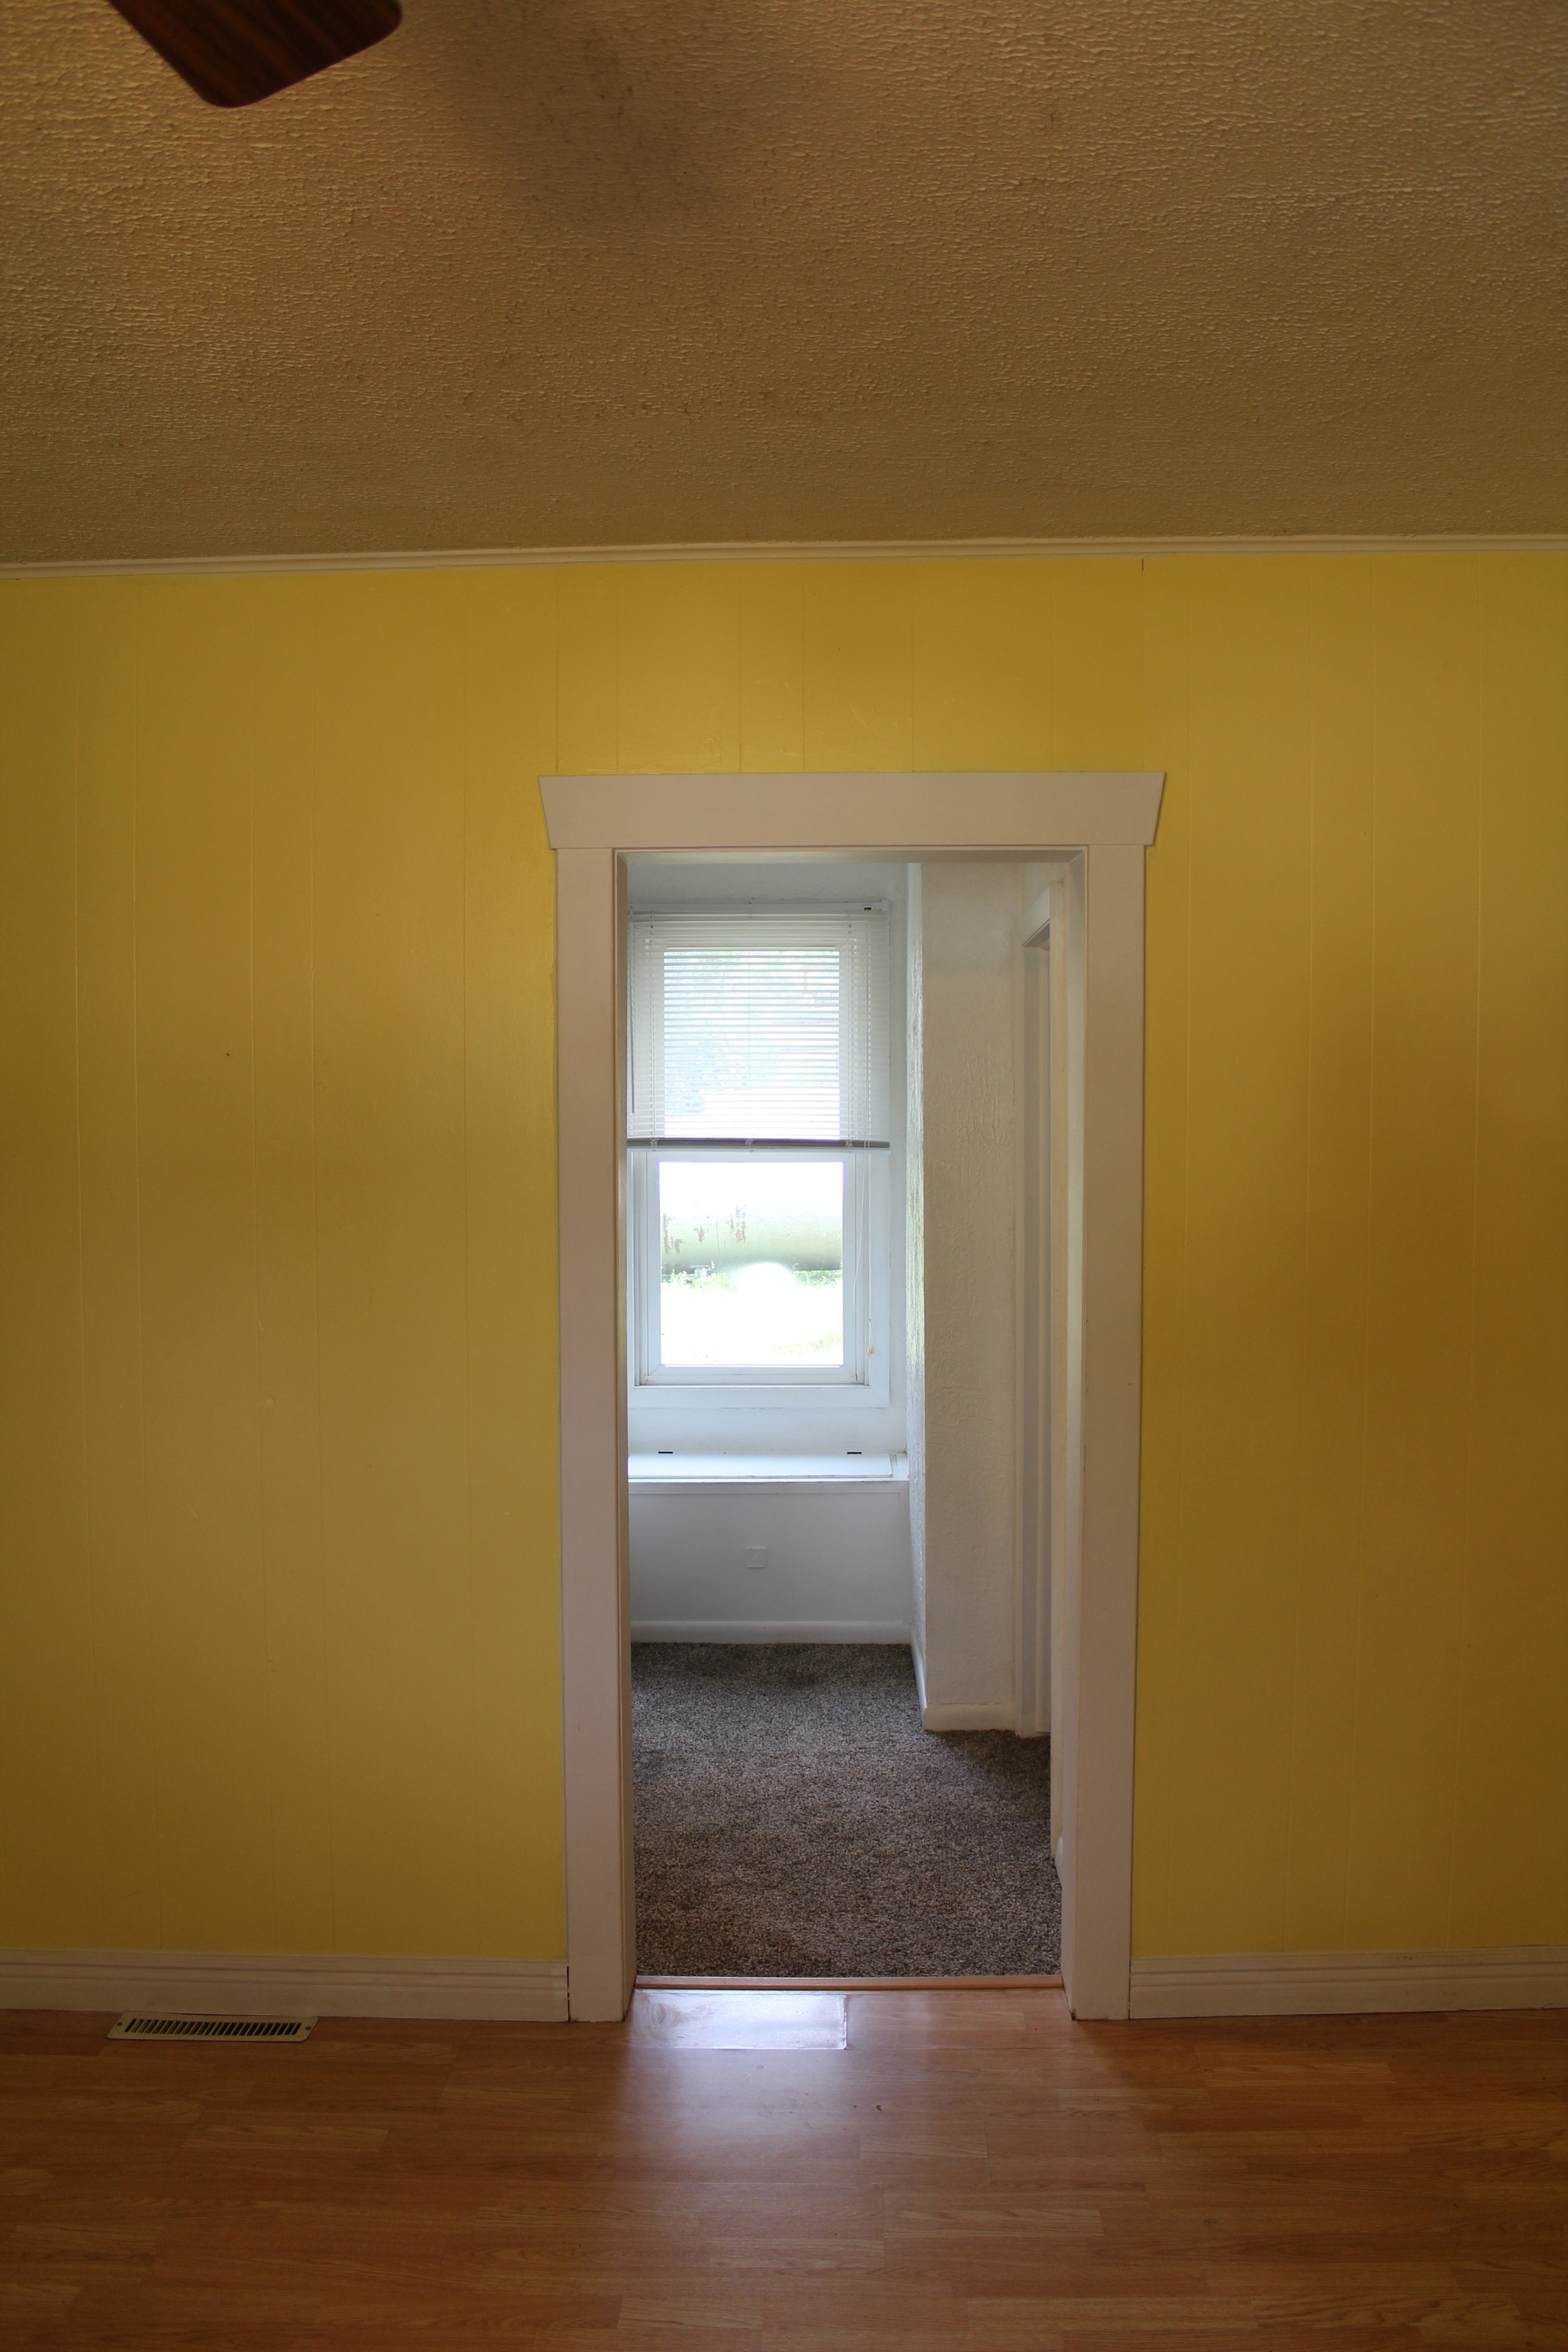 The hallway before....hello yellow walls!